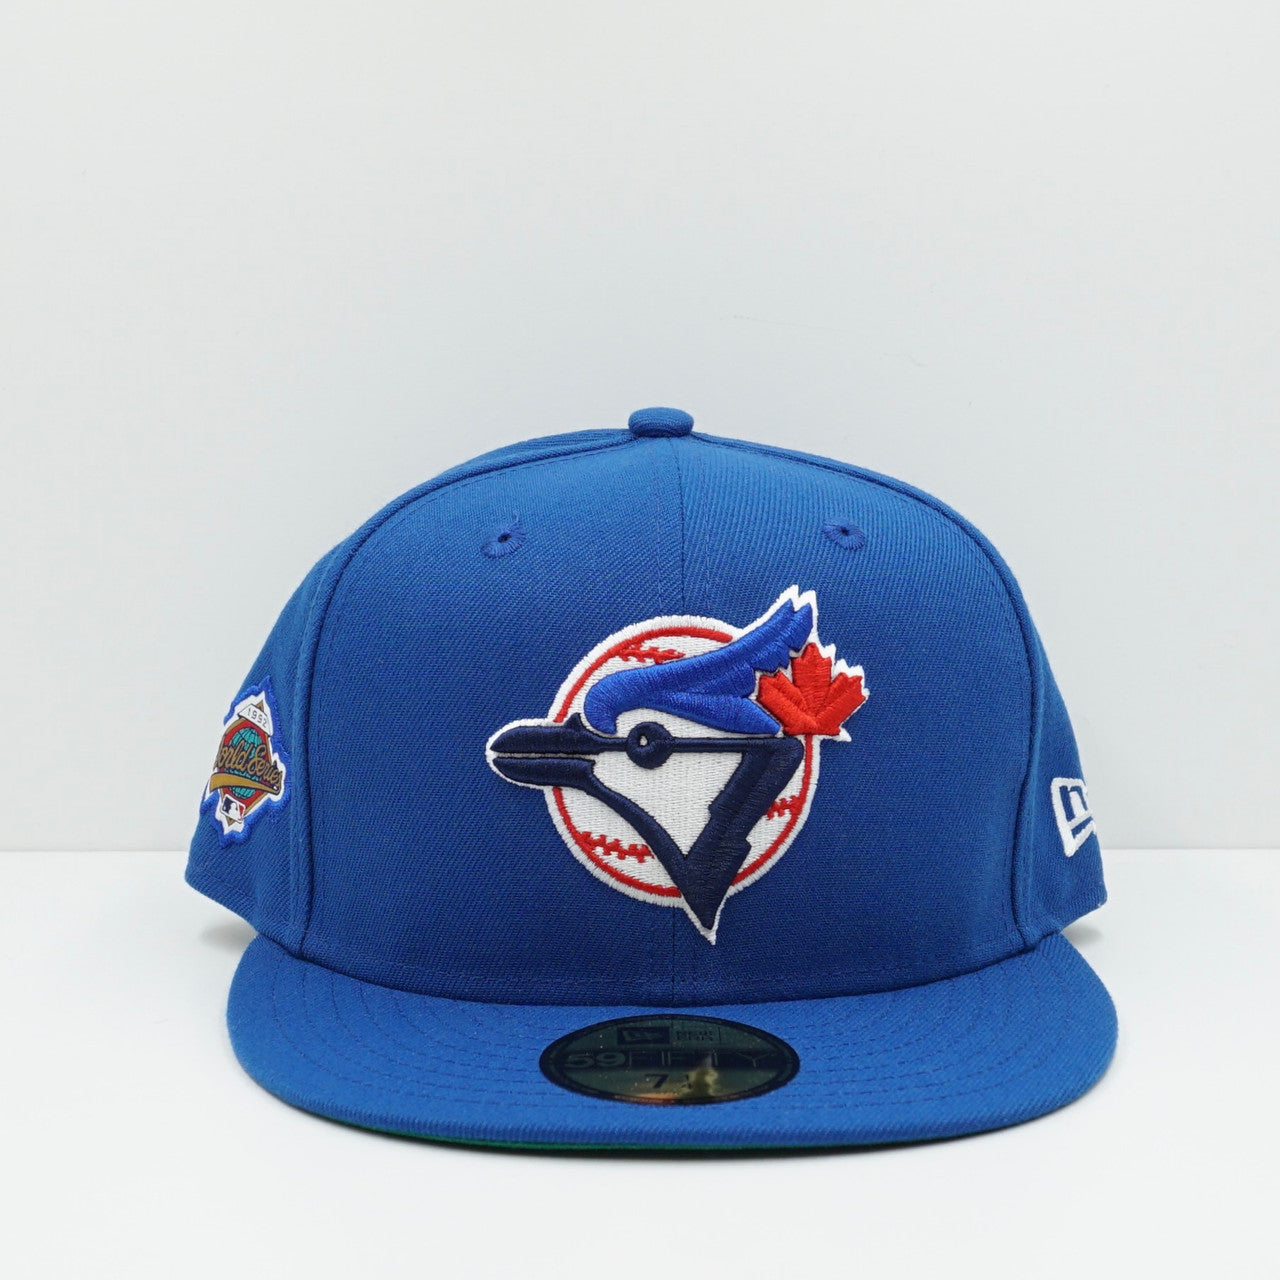 New Era Toronto Blue Jays Blue Fitted Cap